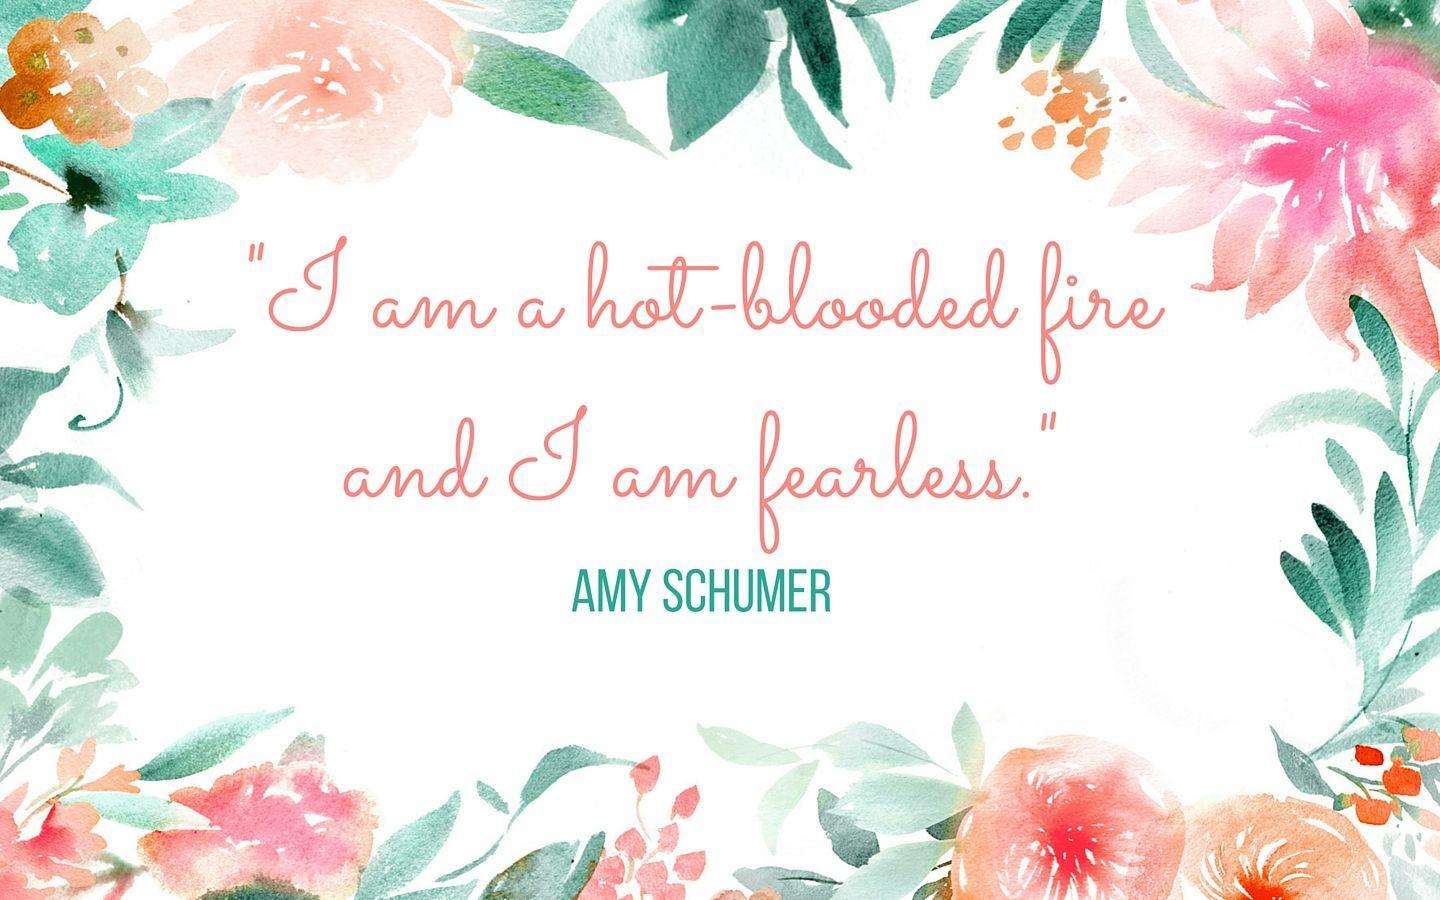 Amy schumer quotes, desktop background, computer background, floral